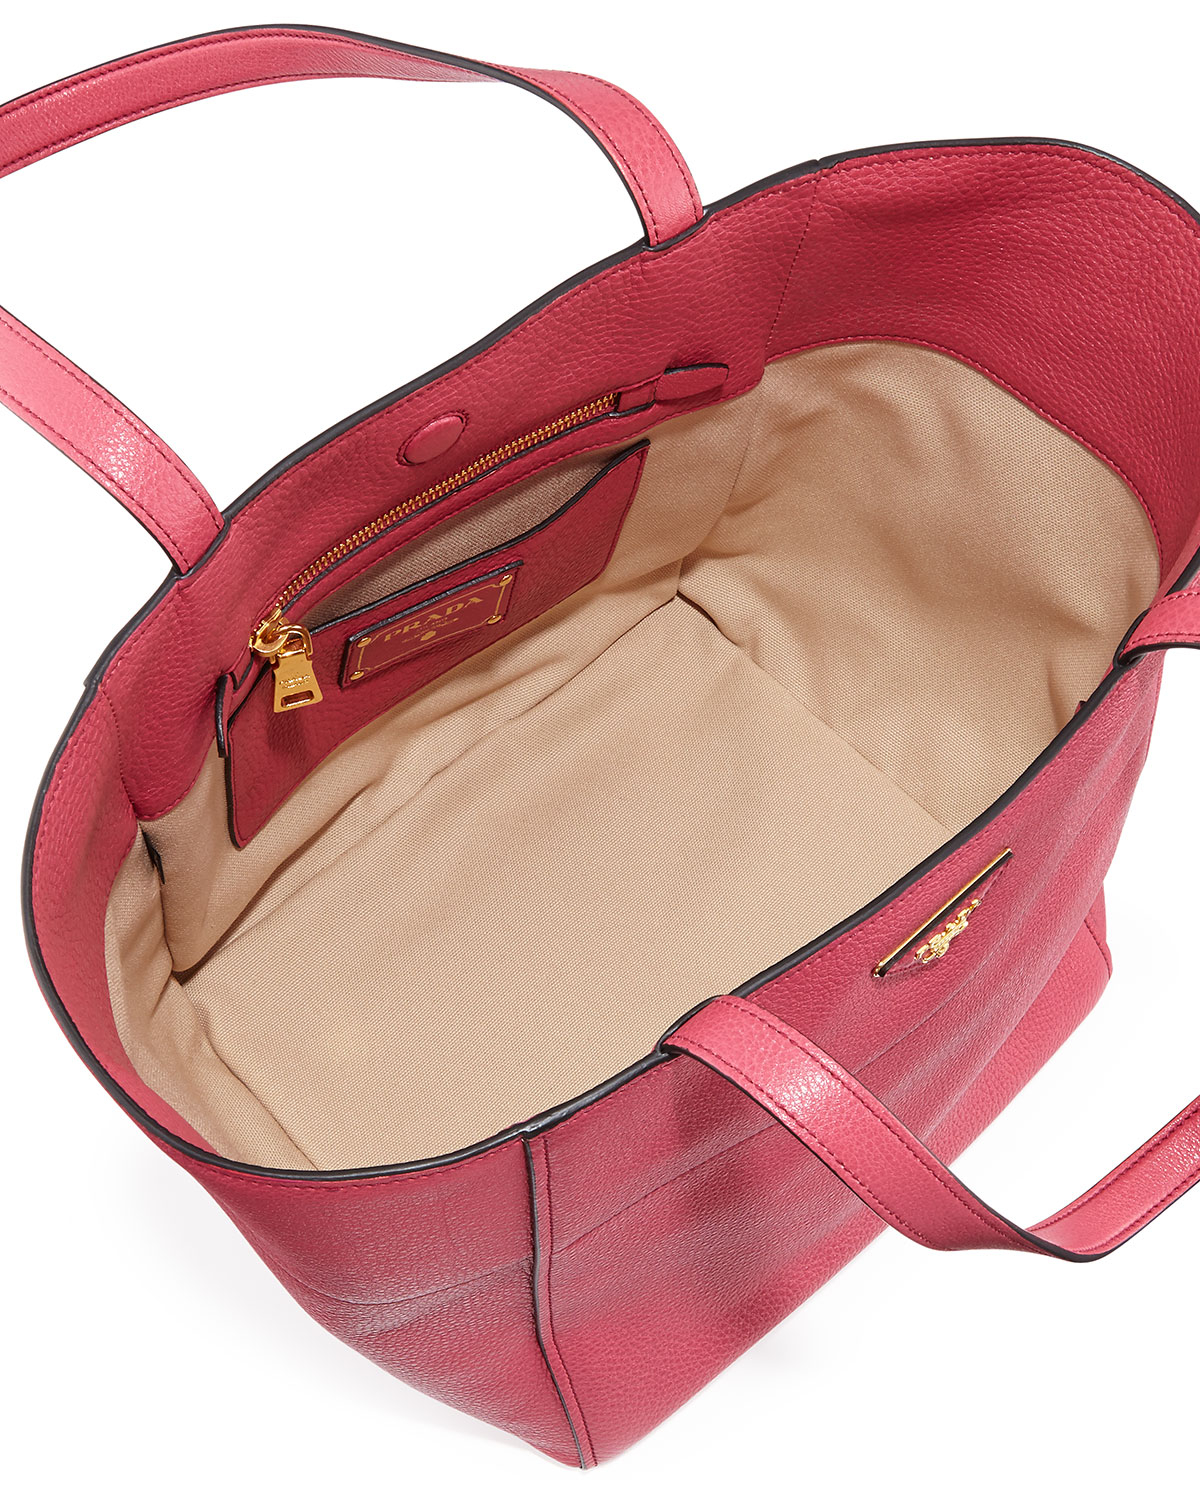 Prada Daino Small Shopper Tote Bag in Pink | Lyst